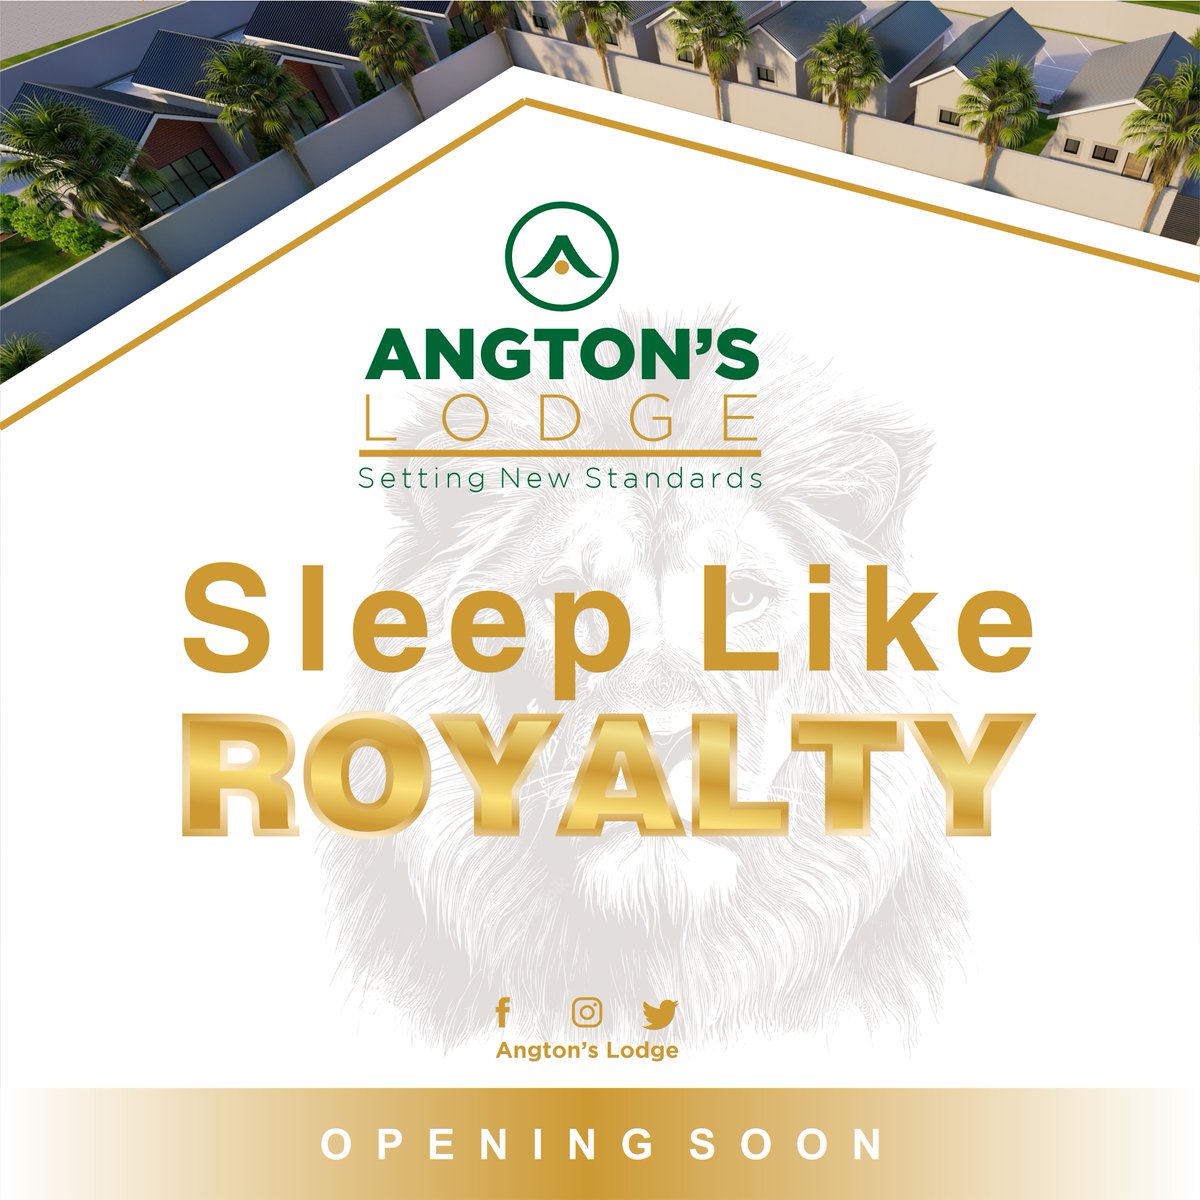 Sleep like royalty

#royalty #king #queen #masvingo #bookings #luxury #tourism #ancientcity #overnight #trip #lodge #overnightstay #AngtonsLodge #meeting